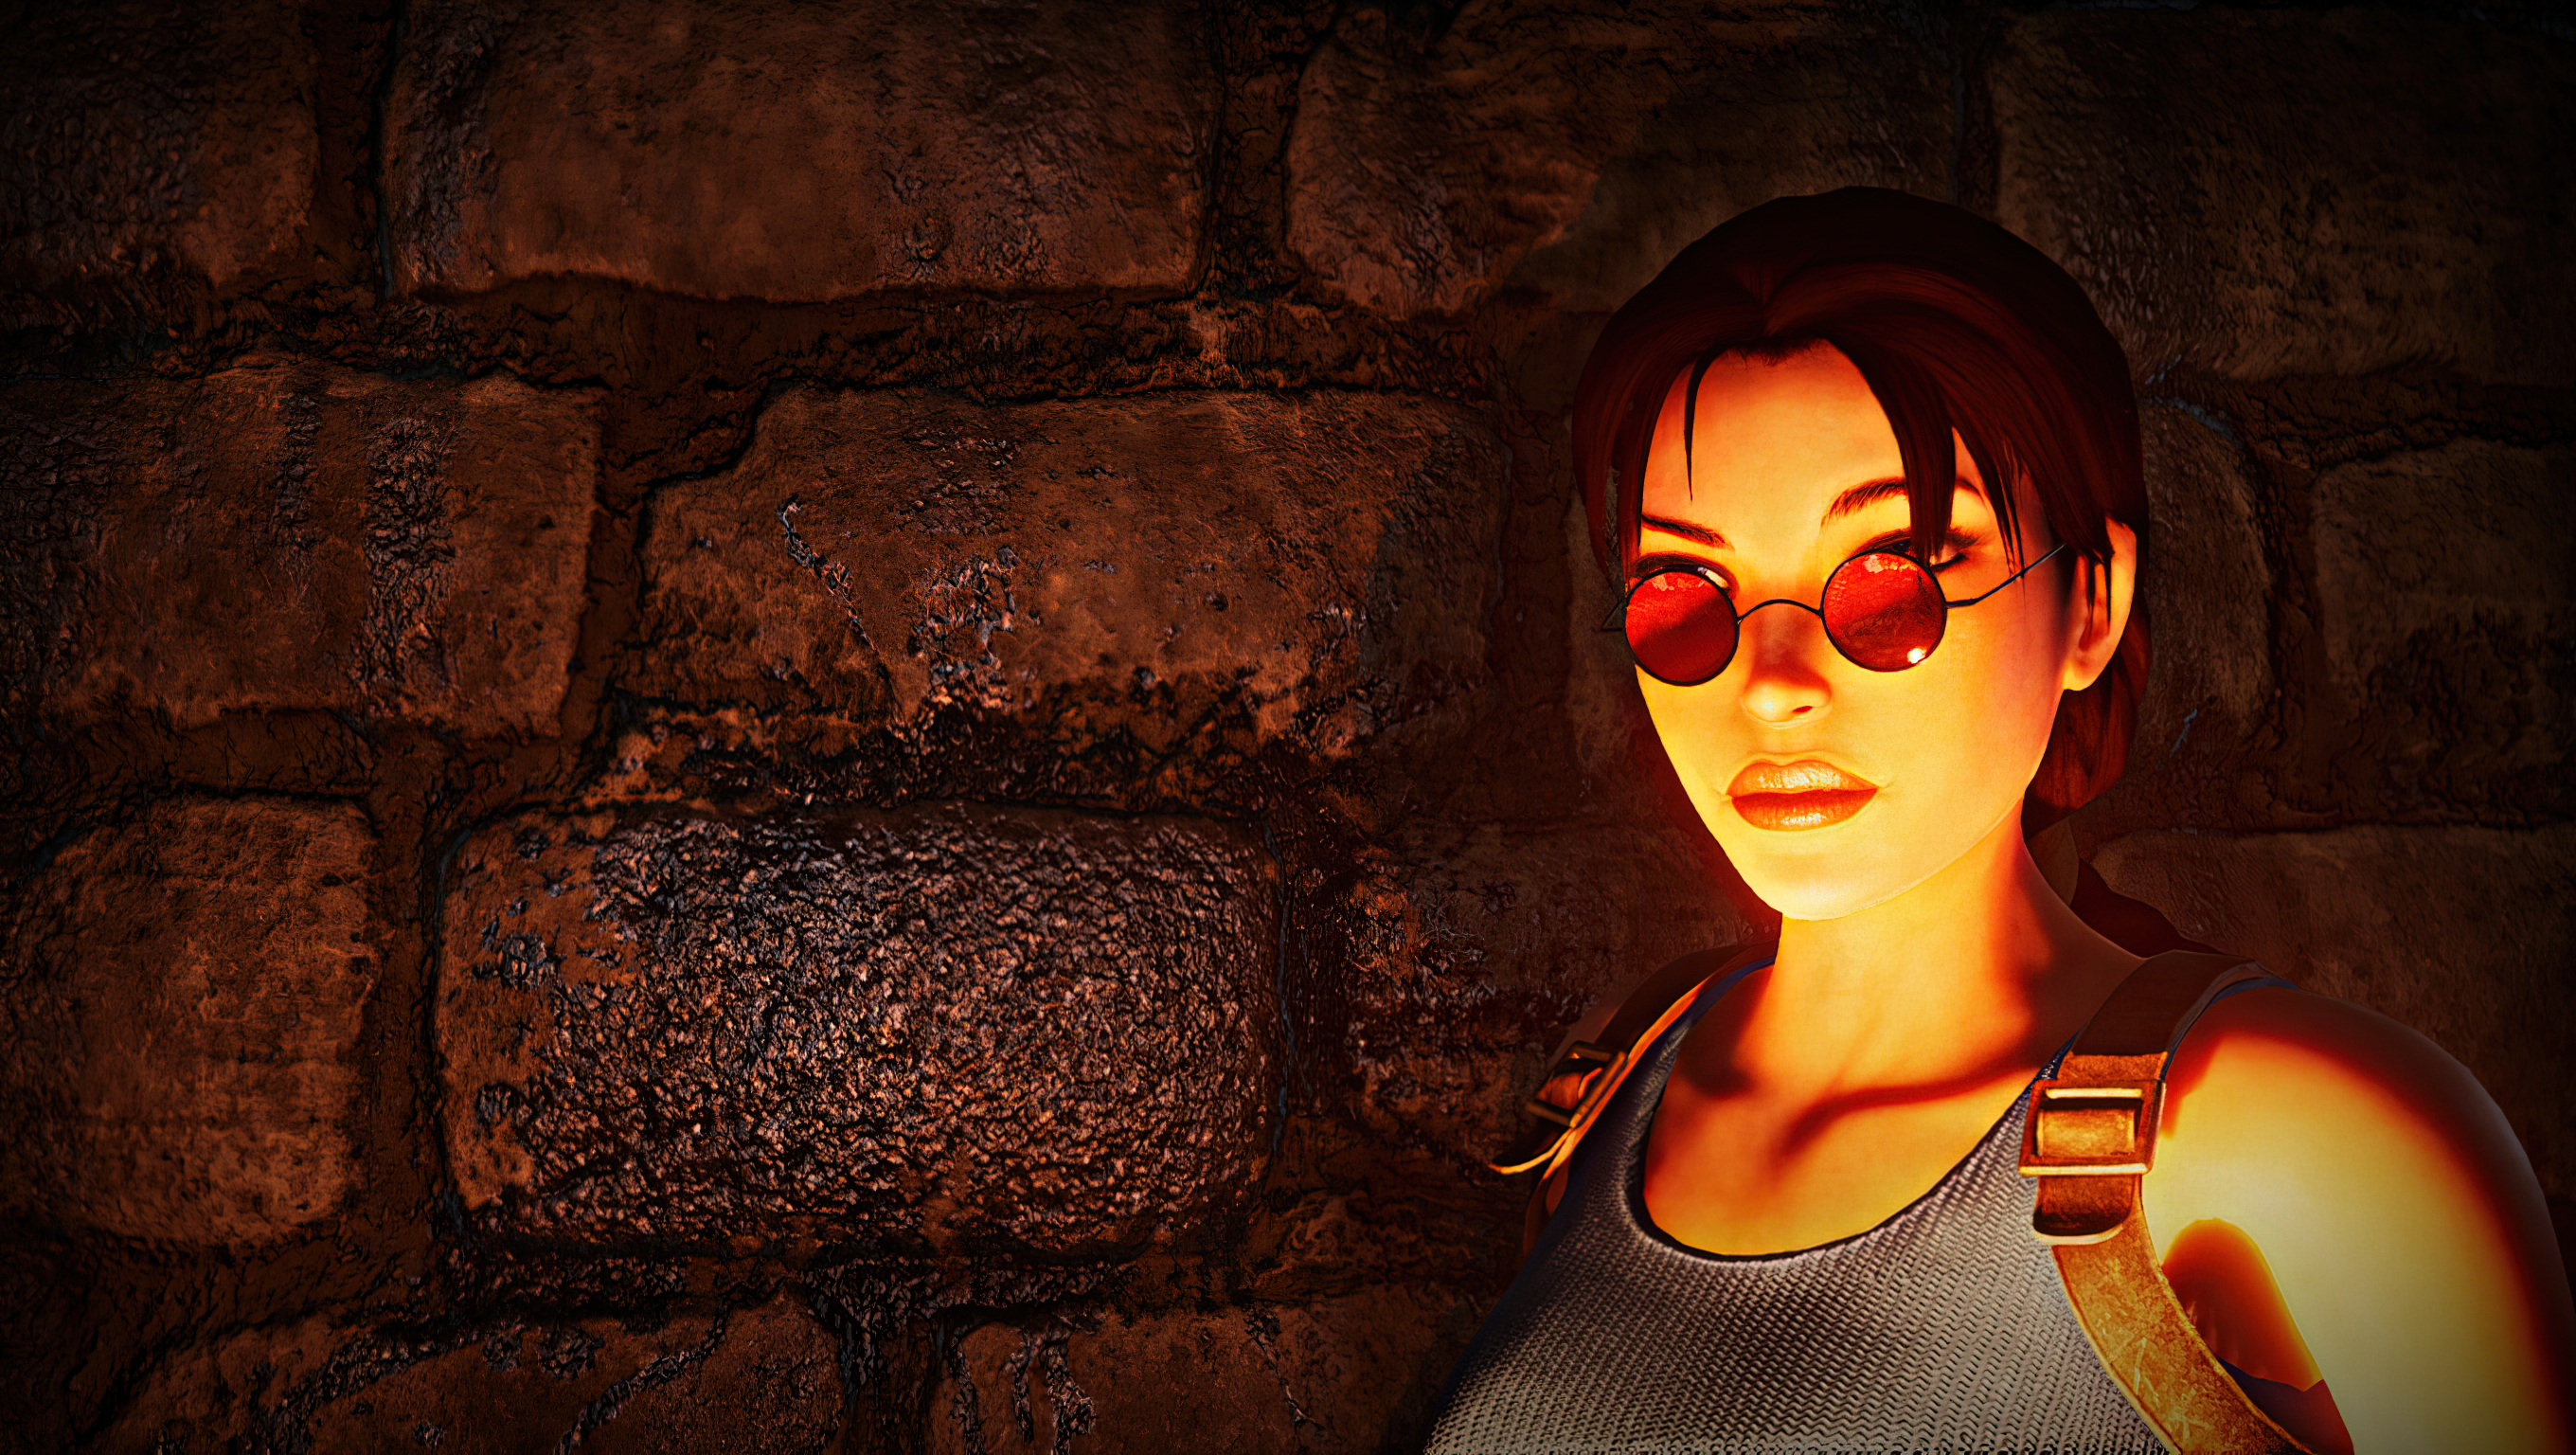 General 2720x1536 Tomb Raider Tomb Raider II: Starring Lara Croft red video game girls women with glasses Lara Croft (Tomb Raider) video game characters video games PC gaming